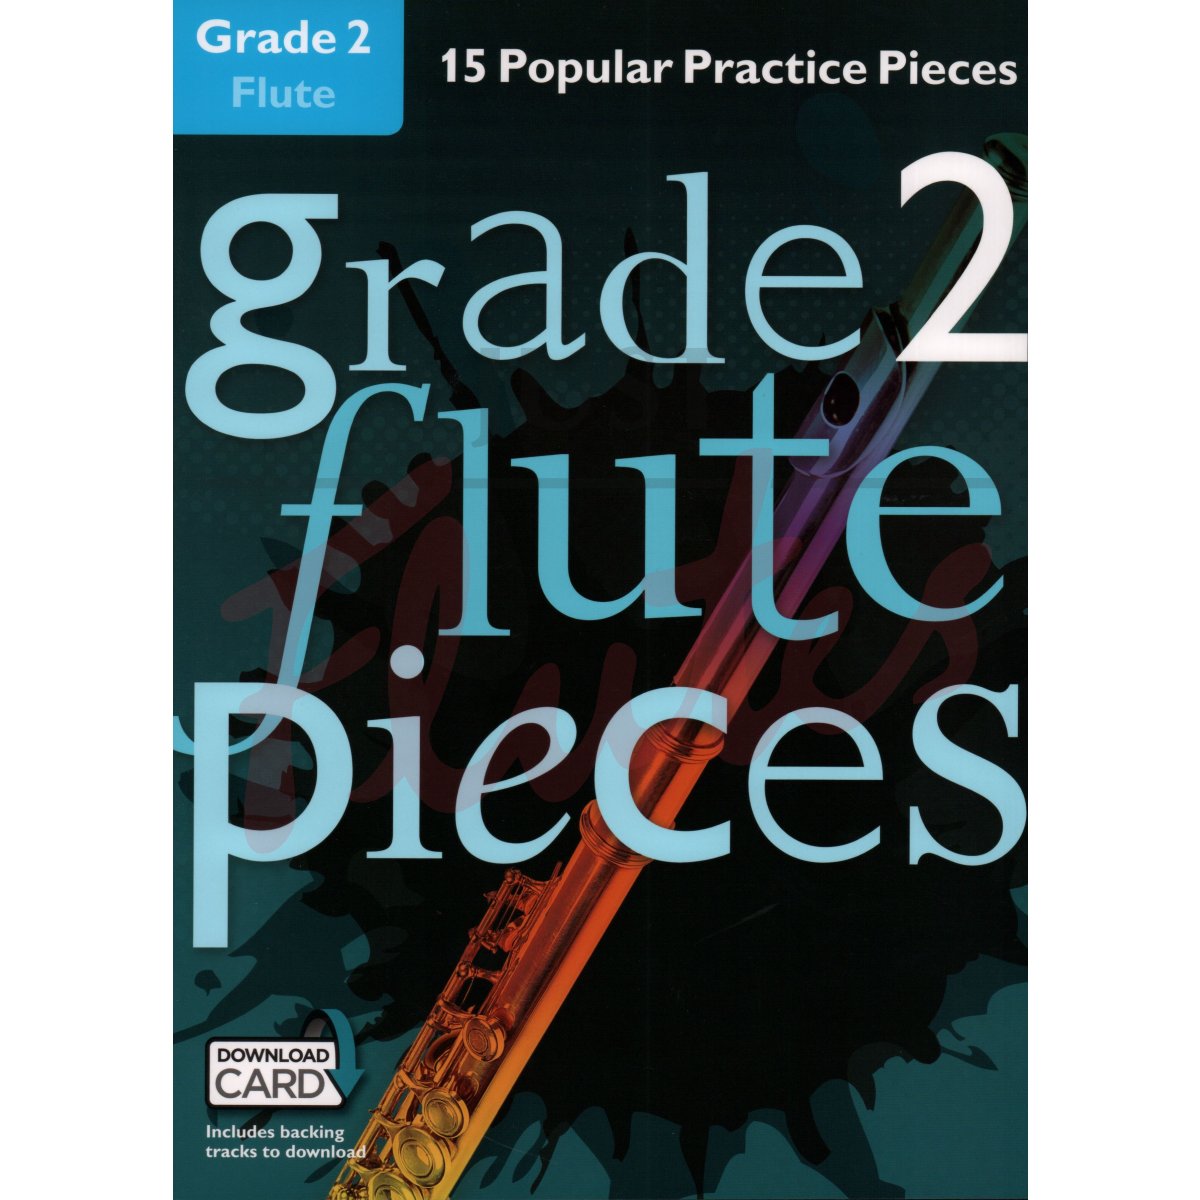 Grade 2 Flute Pieces - 15 Popular Practice Pieces